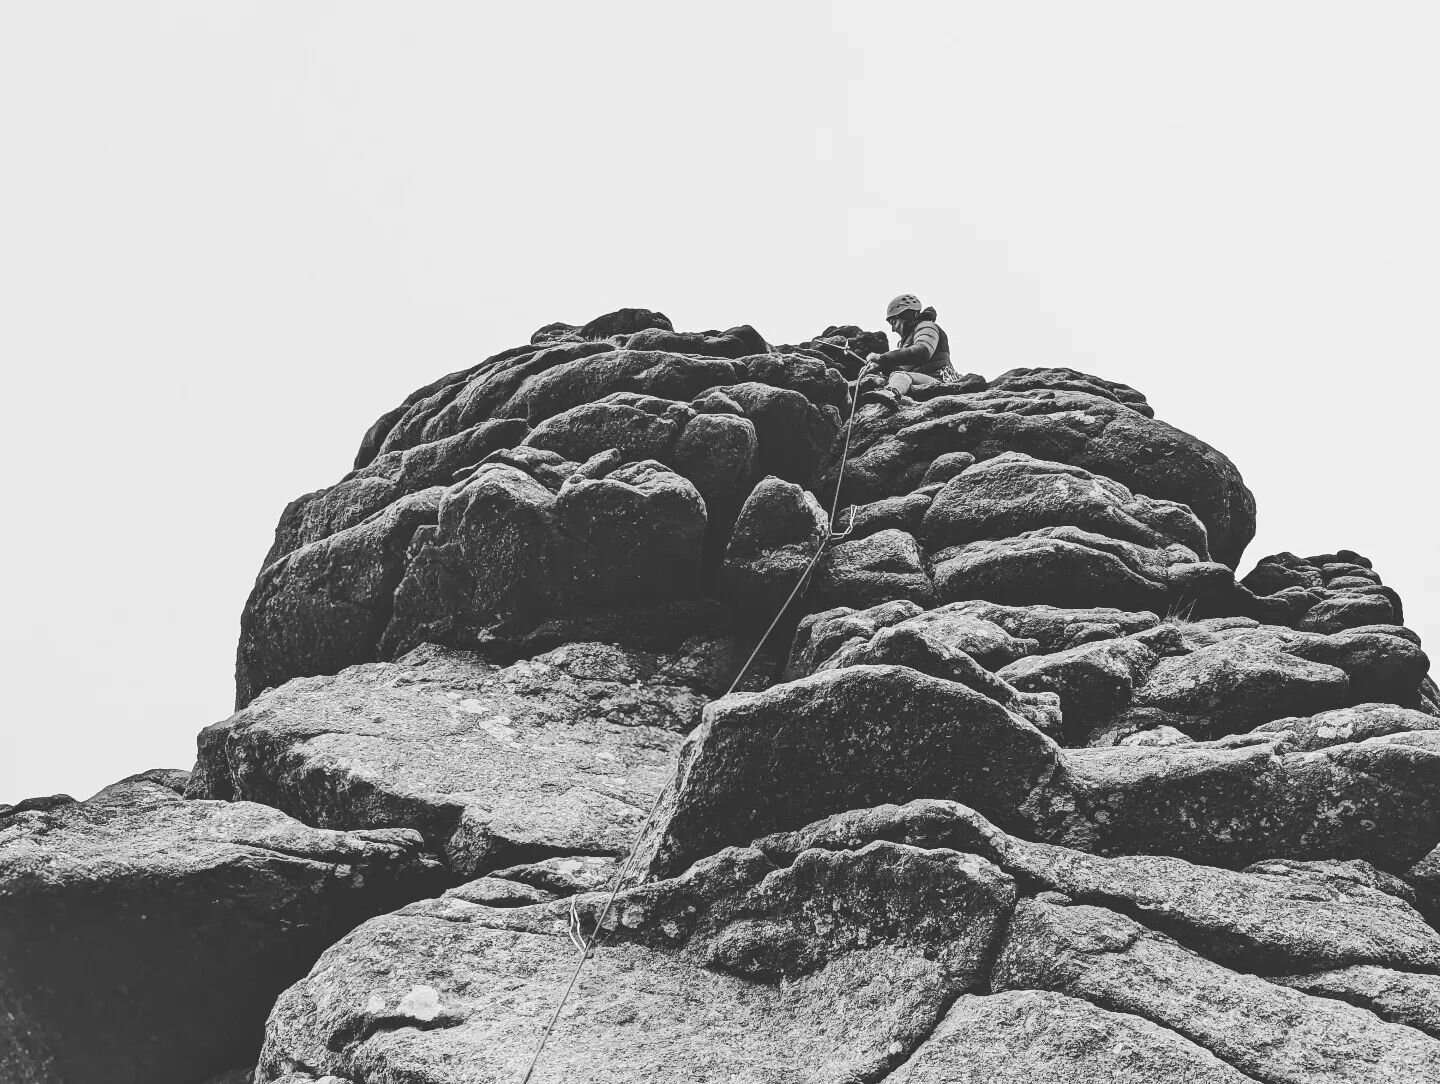 @emmajhide leading up Paddy on Hound Tor

#climbdevon #dartmoor #dartmoornationalpark #rockclimbing #climb #climbinglife #climber #nature #adventure #rockclimber #outdoors #tradclimbing #outdoor #fitness #climbers